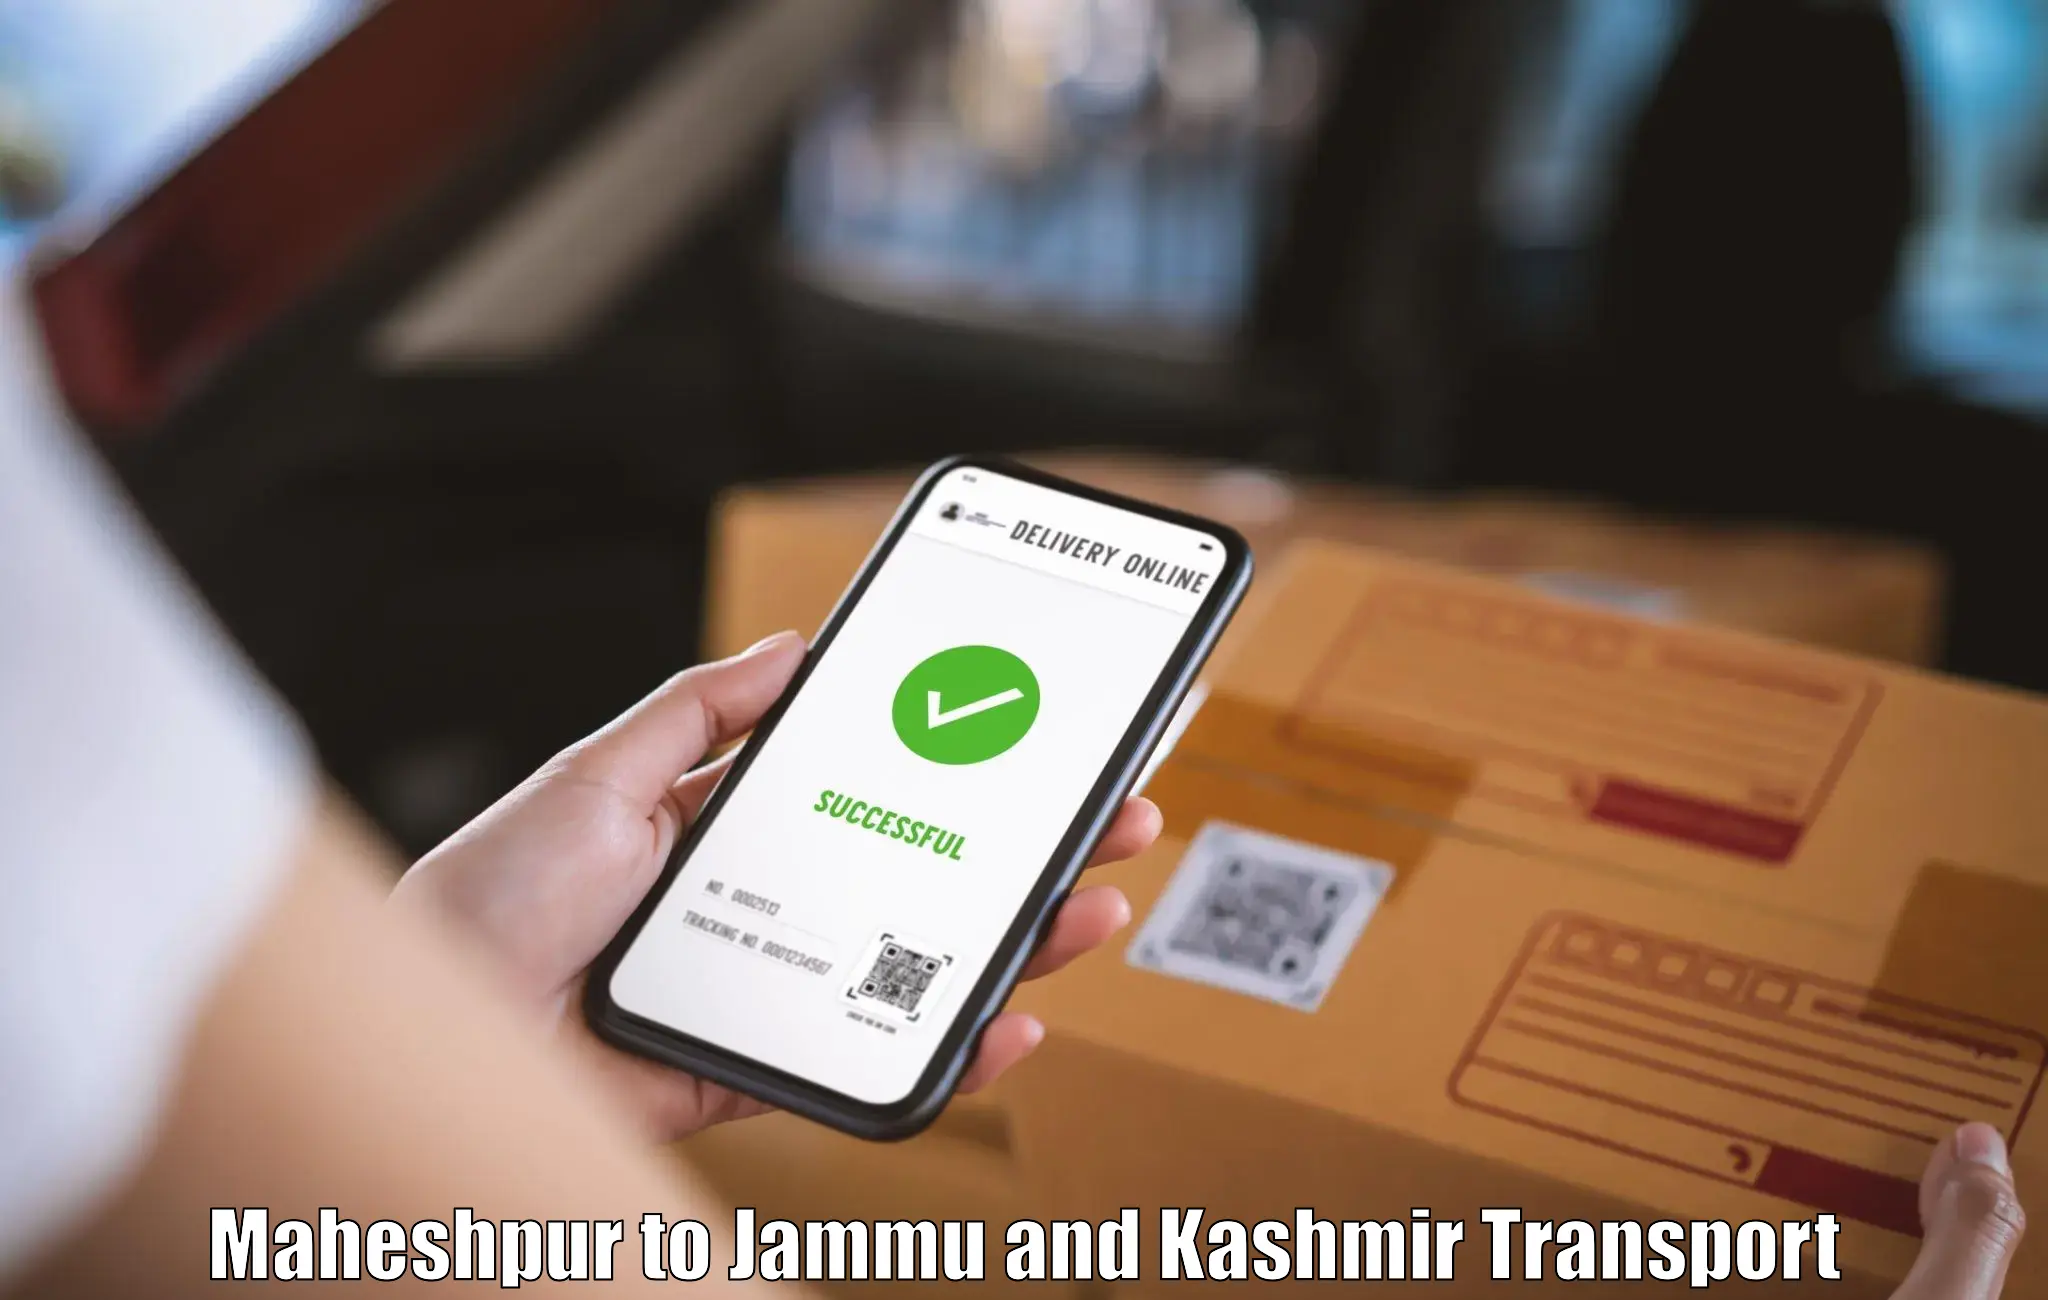 Bike shipping service Maheshpur to Jammu and Kashmir